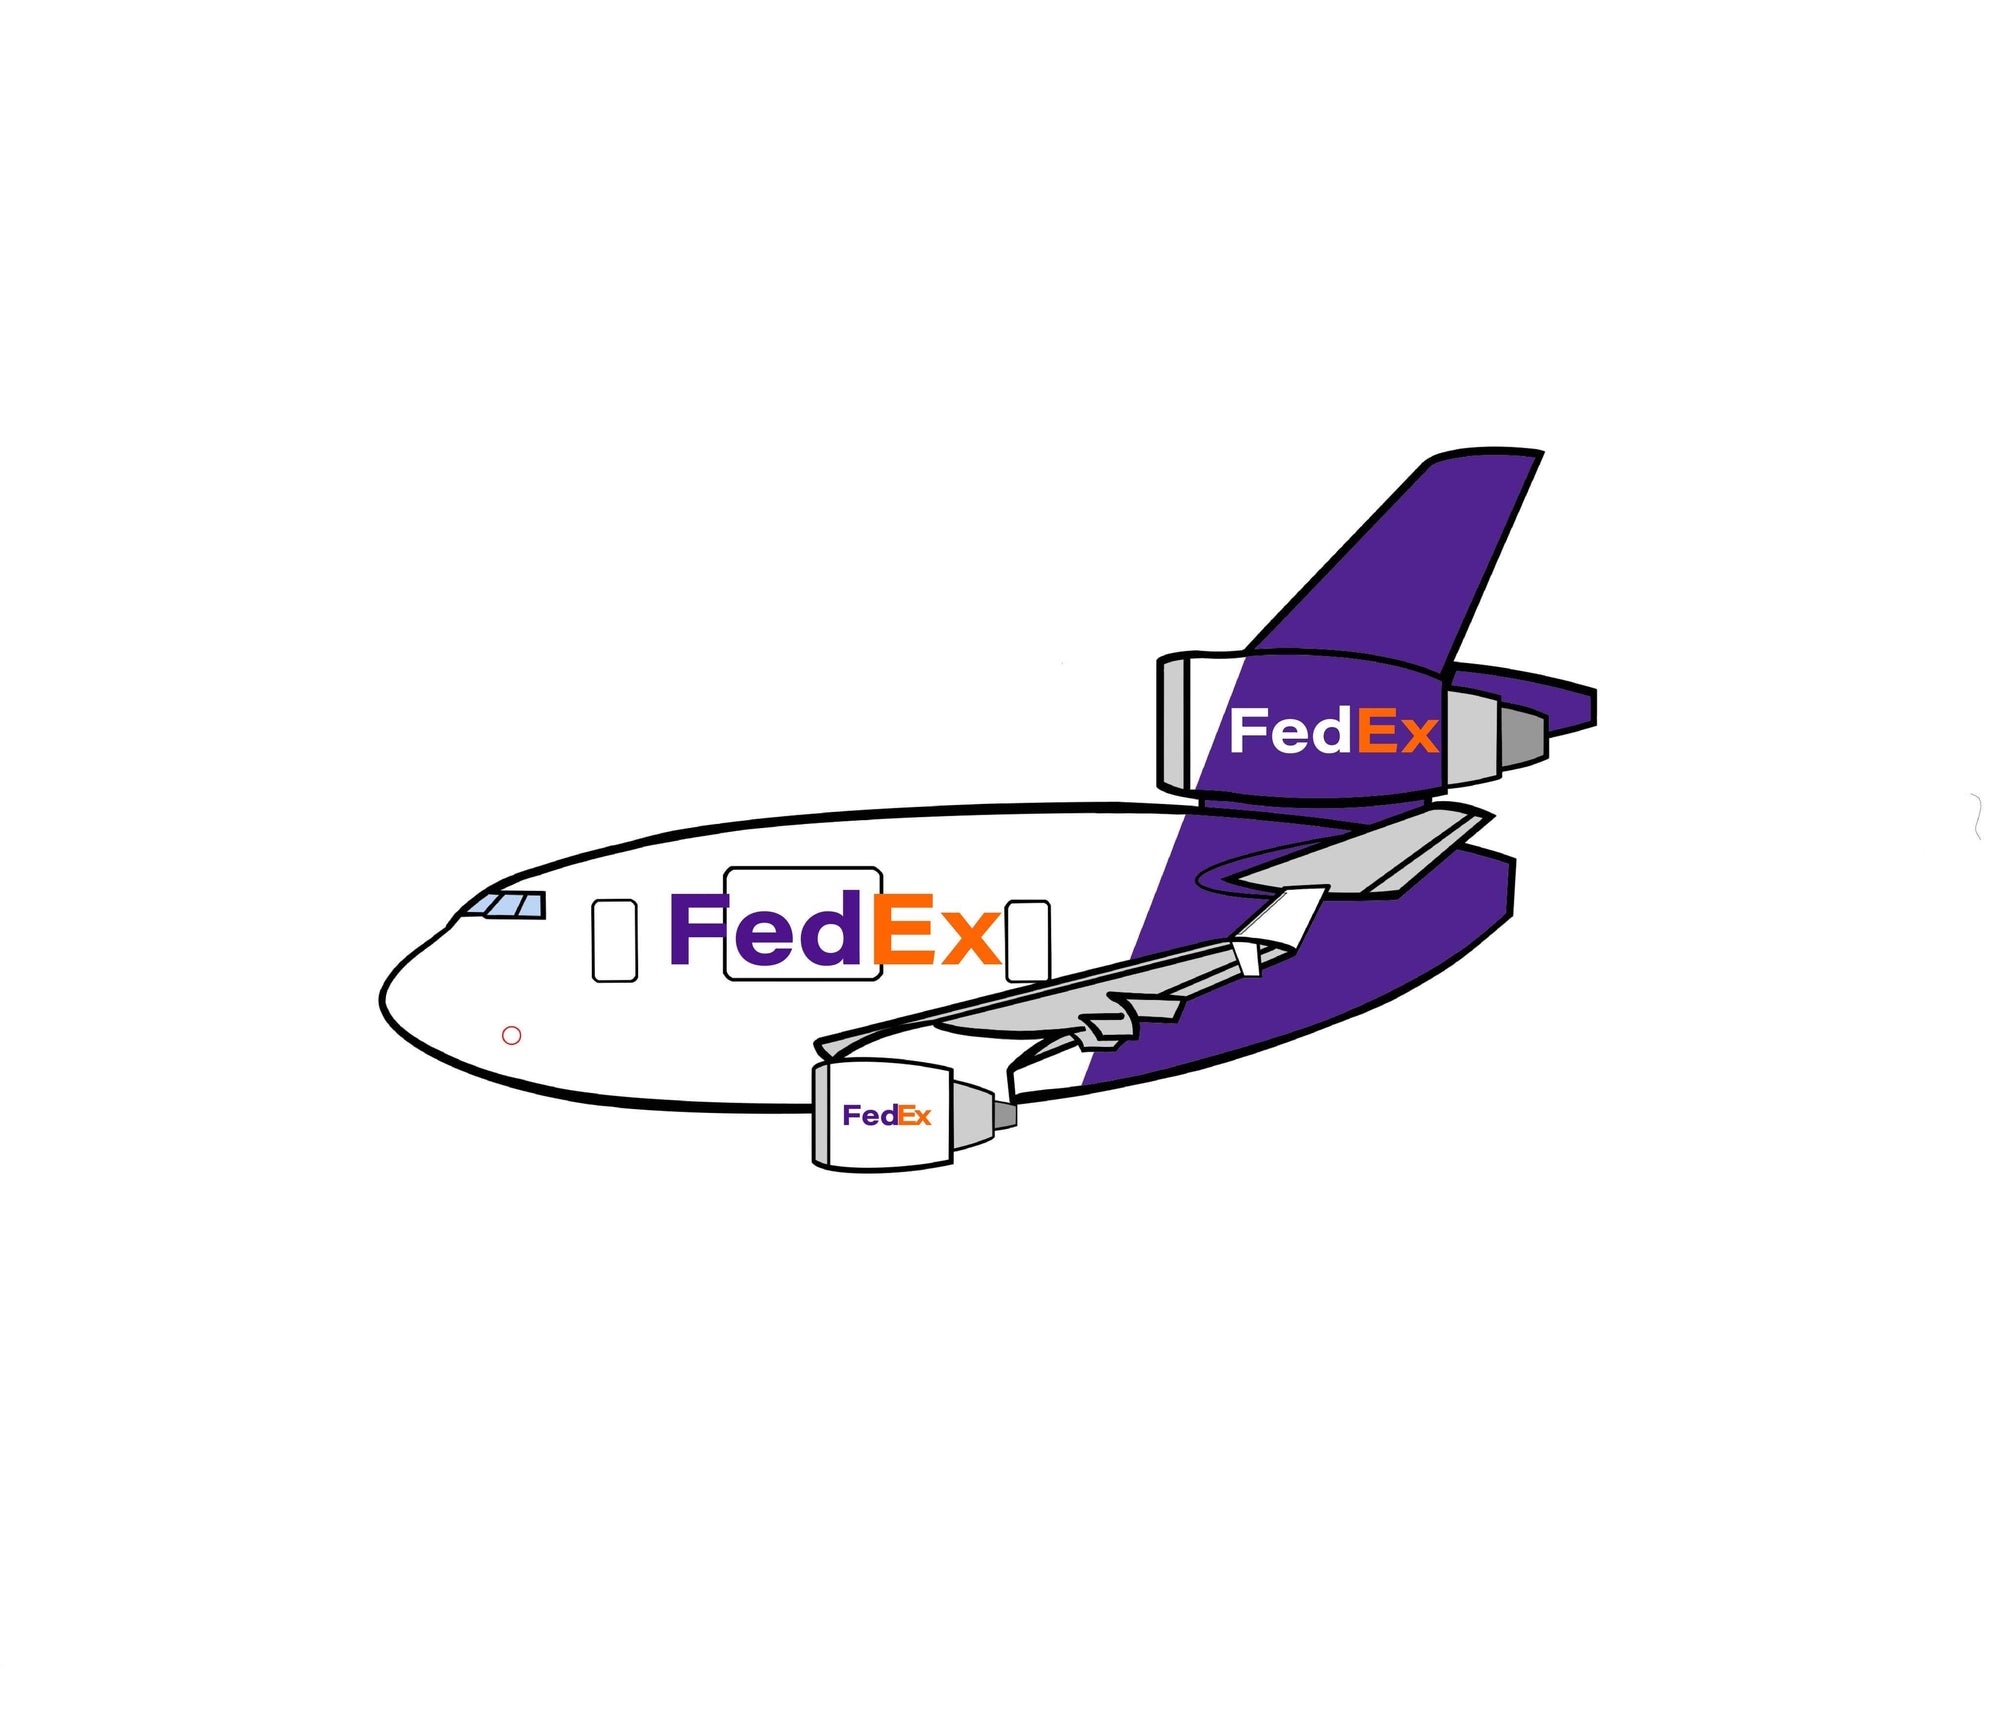 FedEx Plane image